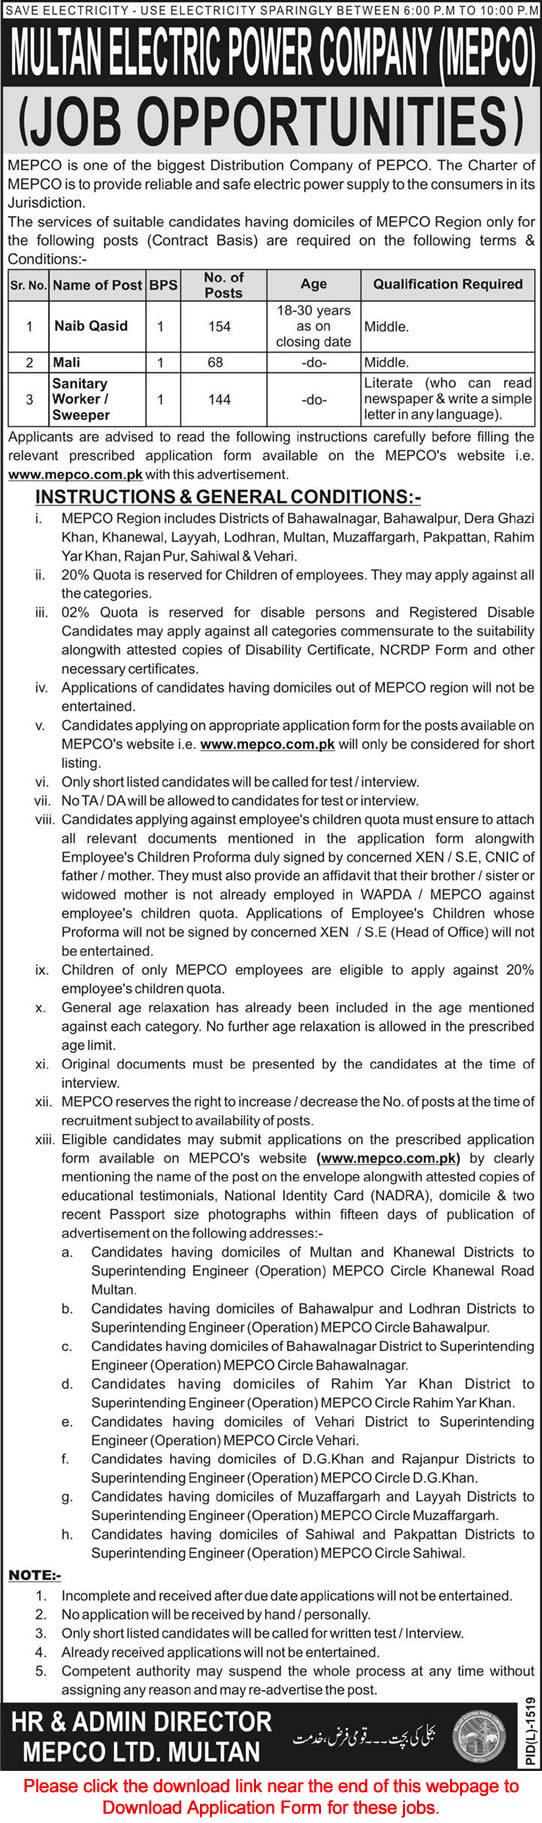 MEPCO Jobs 2015 Naib Qasid, Mali & Sanitary Worker / Sweeper Application Form WAPDA